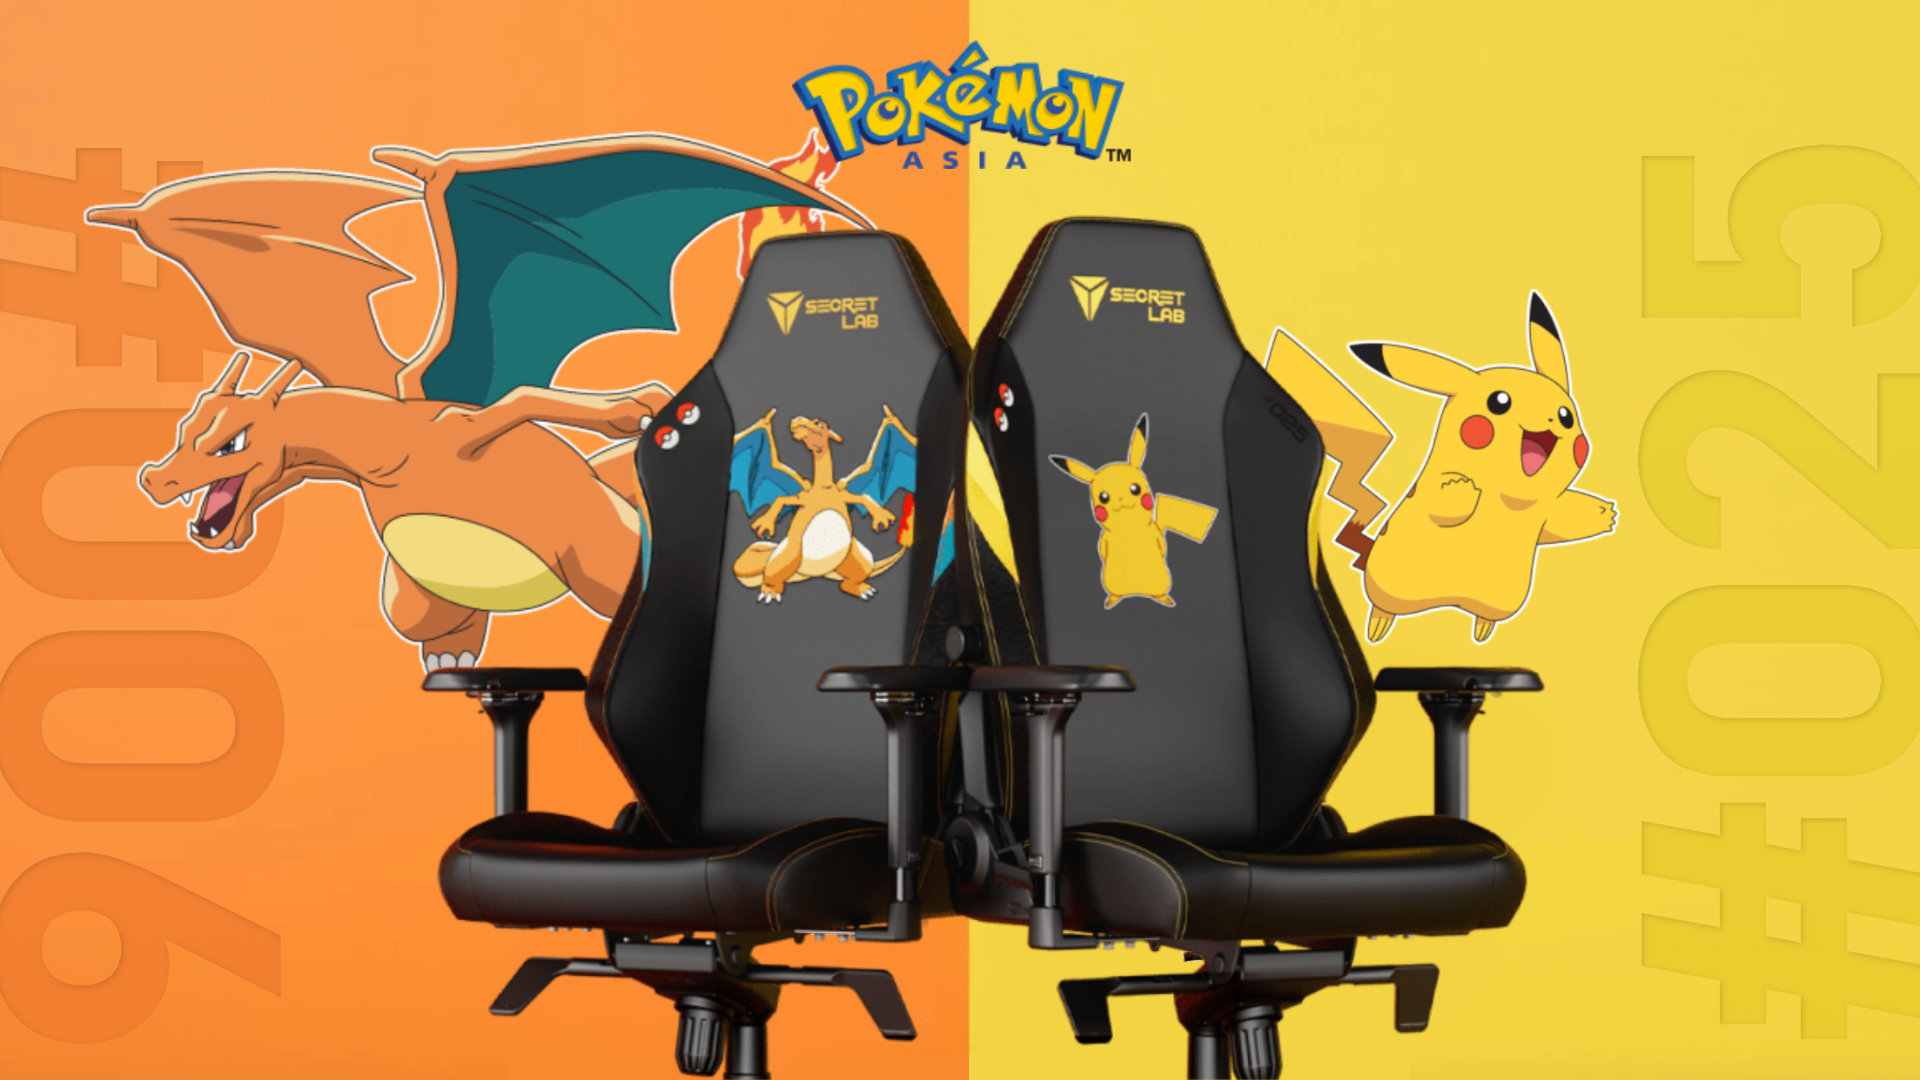 Secretlab celebrates Pokémon with Pikachu and Charizard gaming chairs